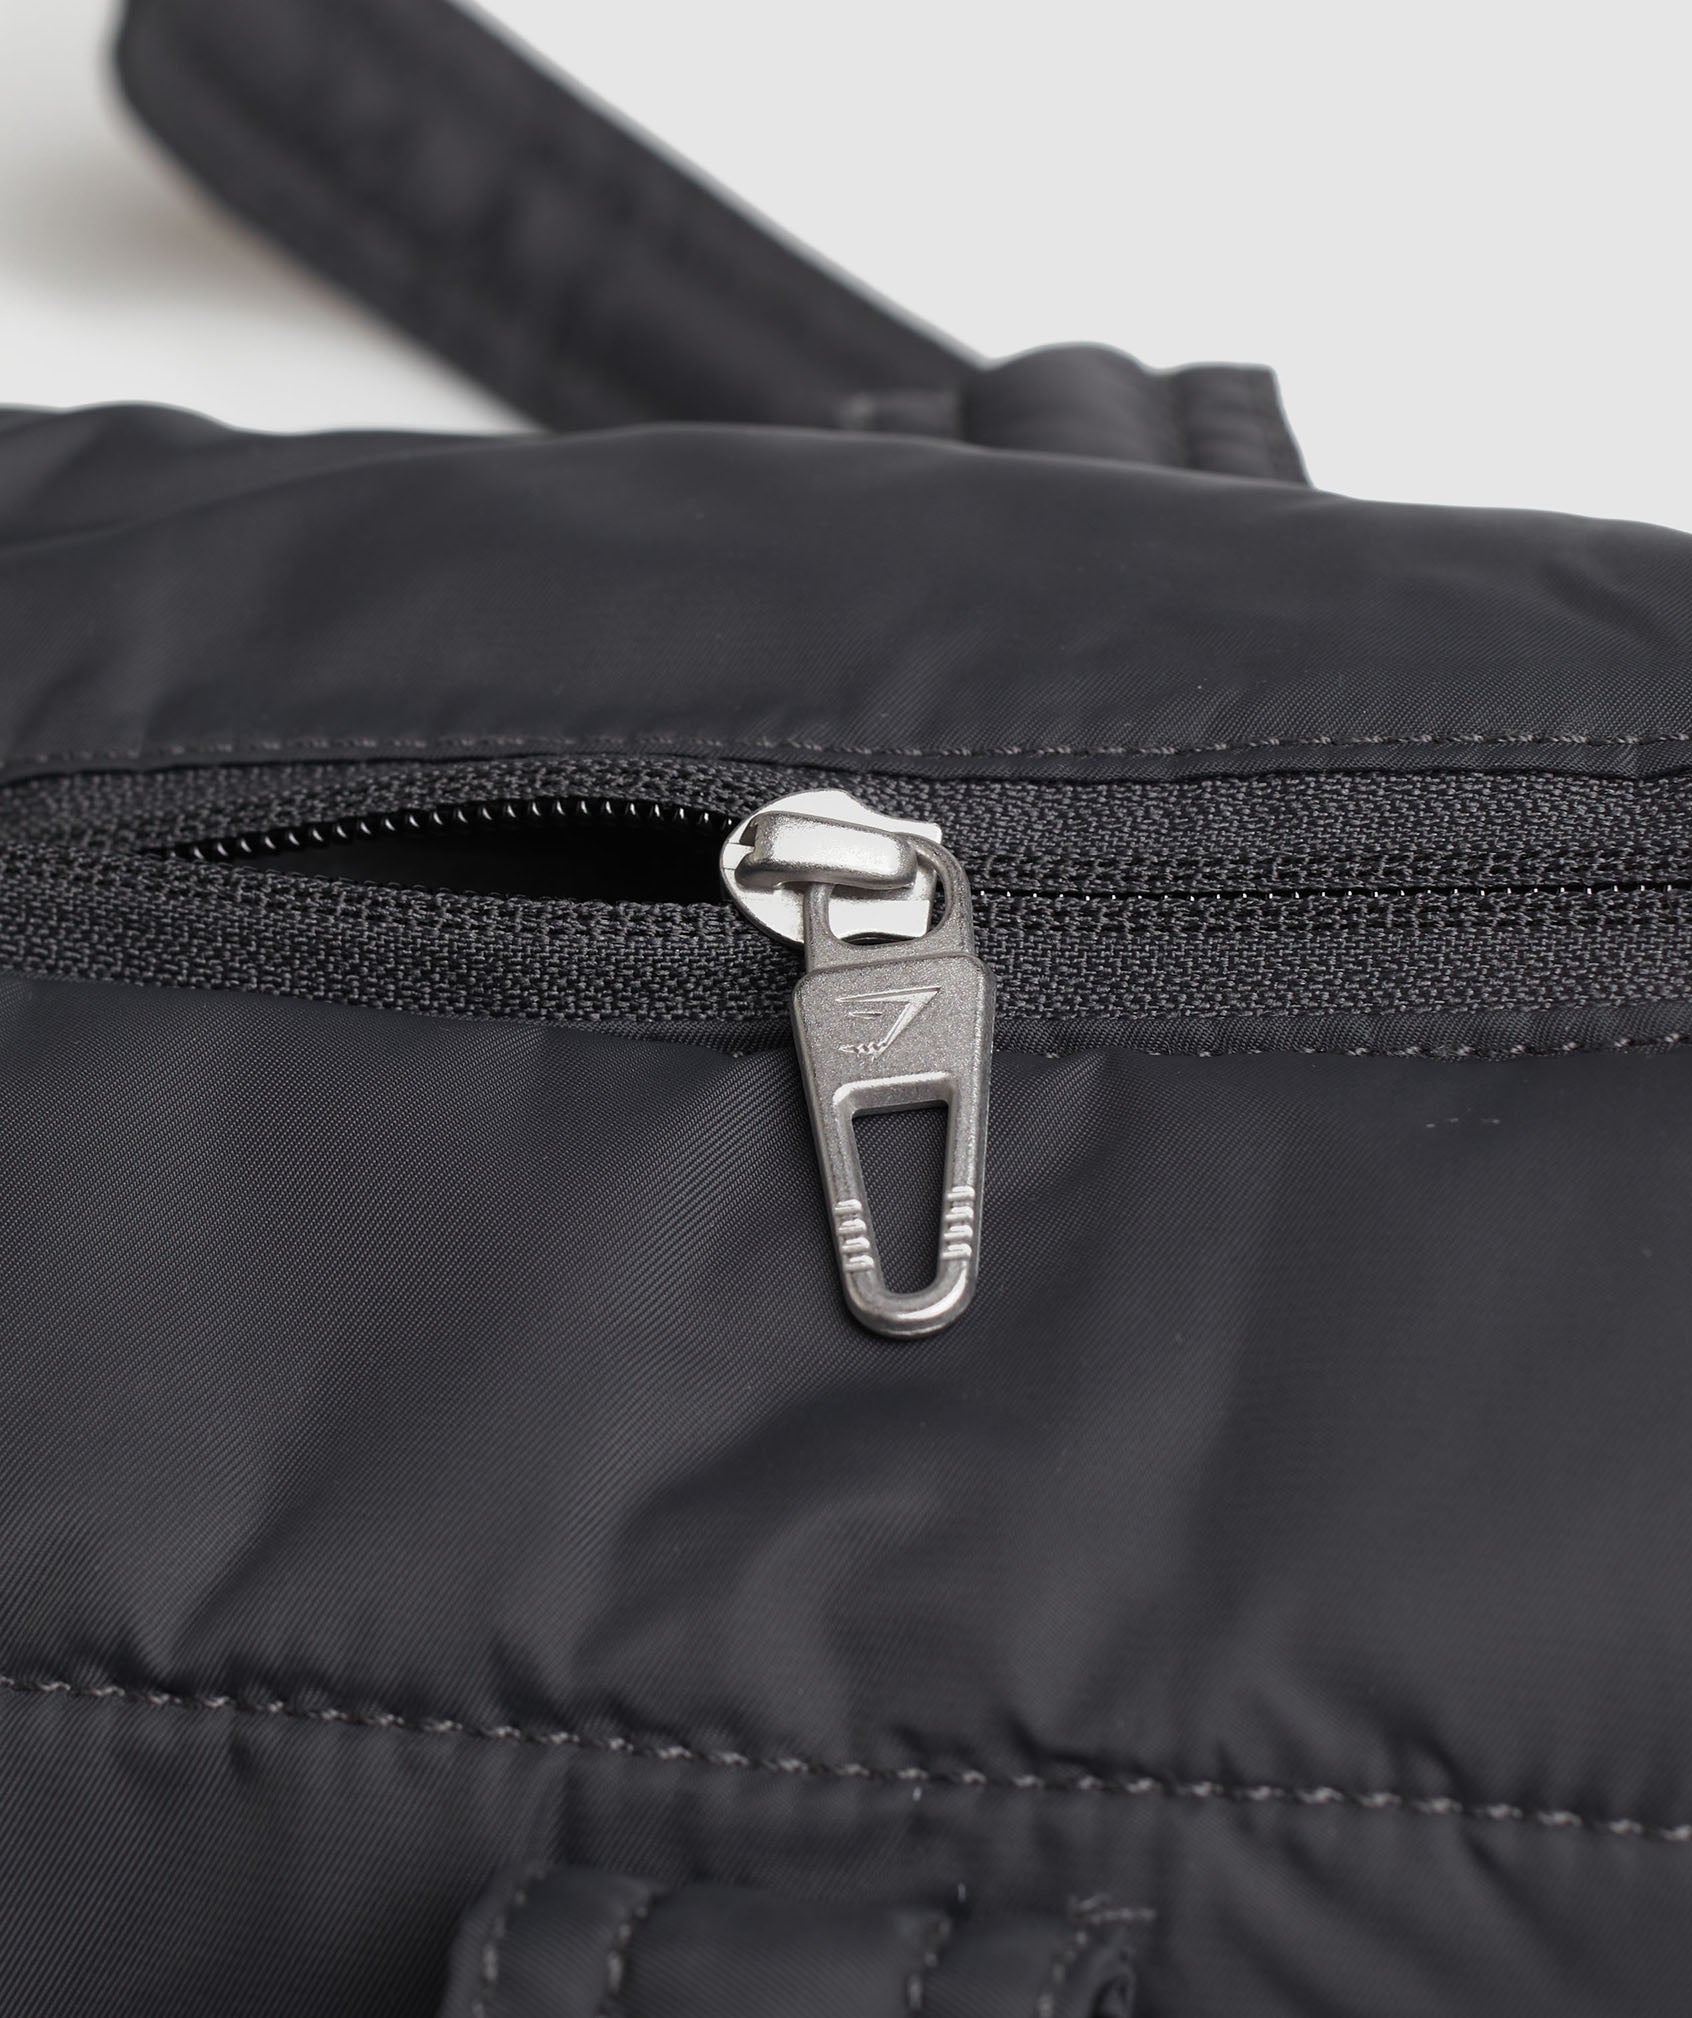 Premium Lifestyle Mini Barrel Bag in Onyx Grey